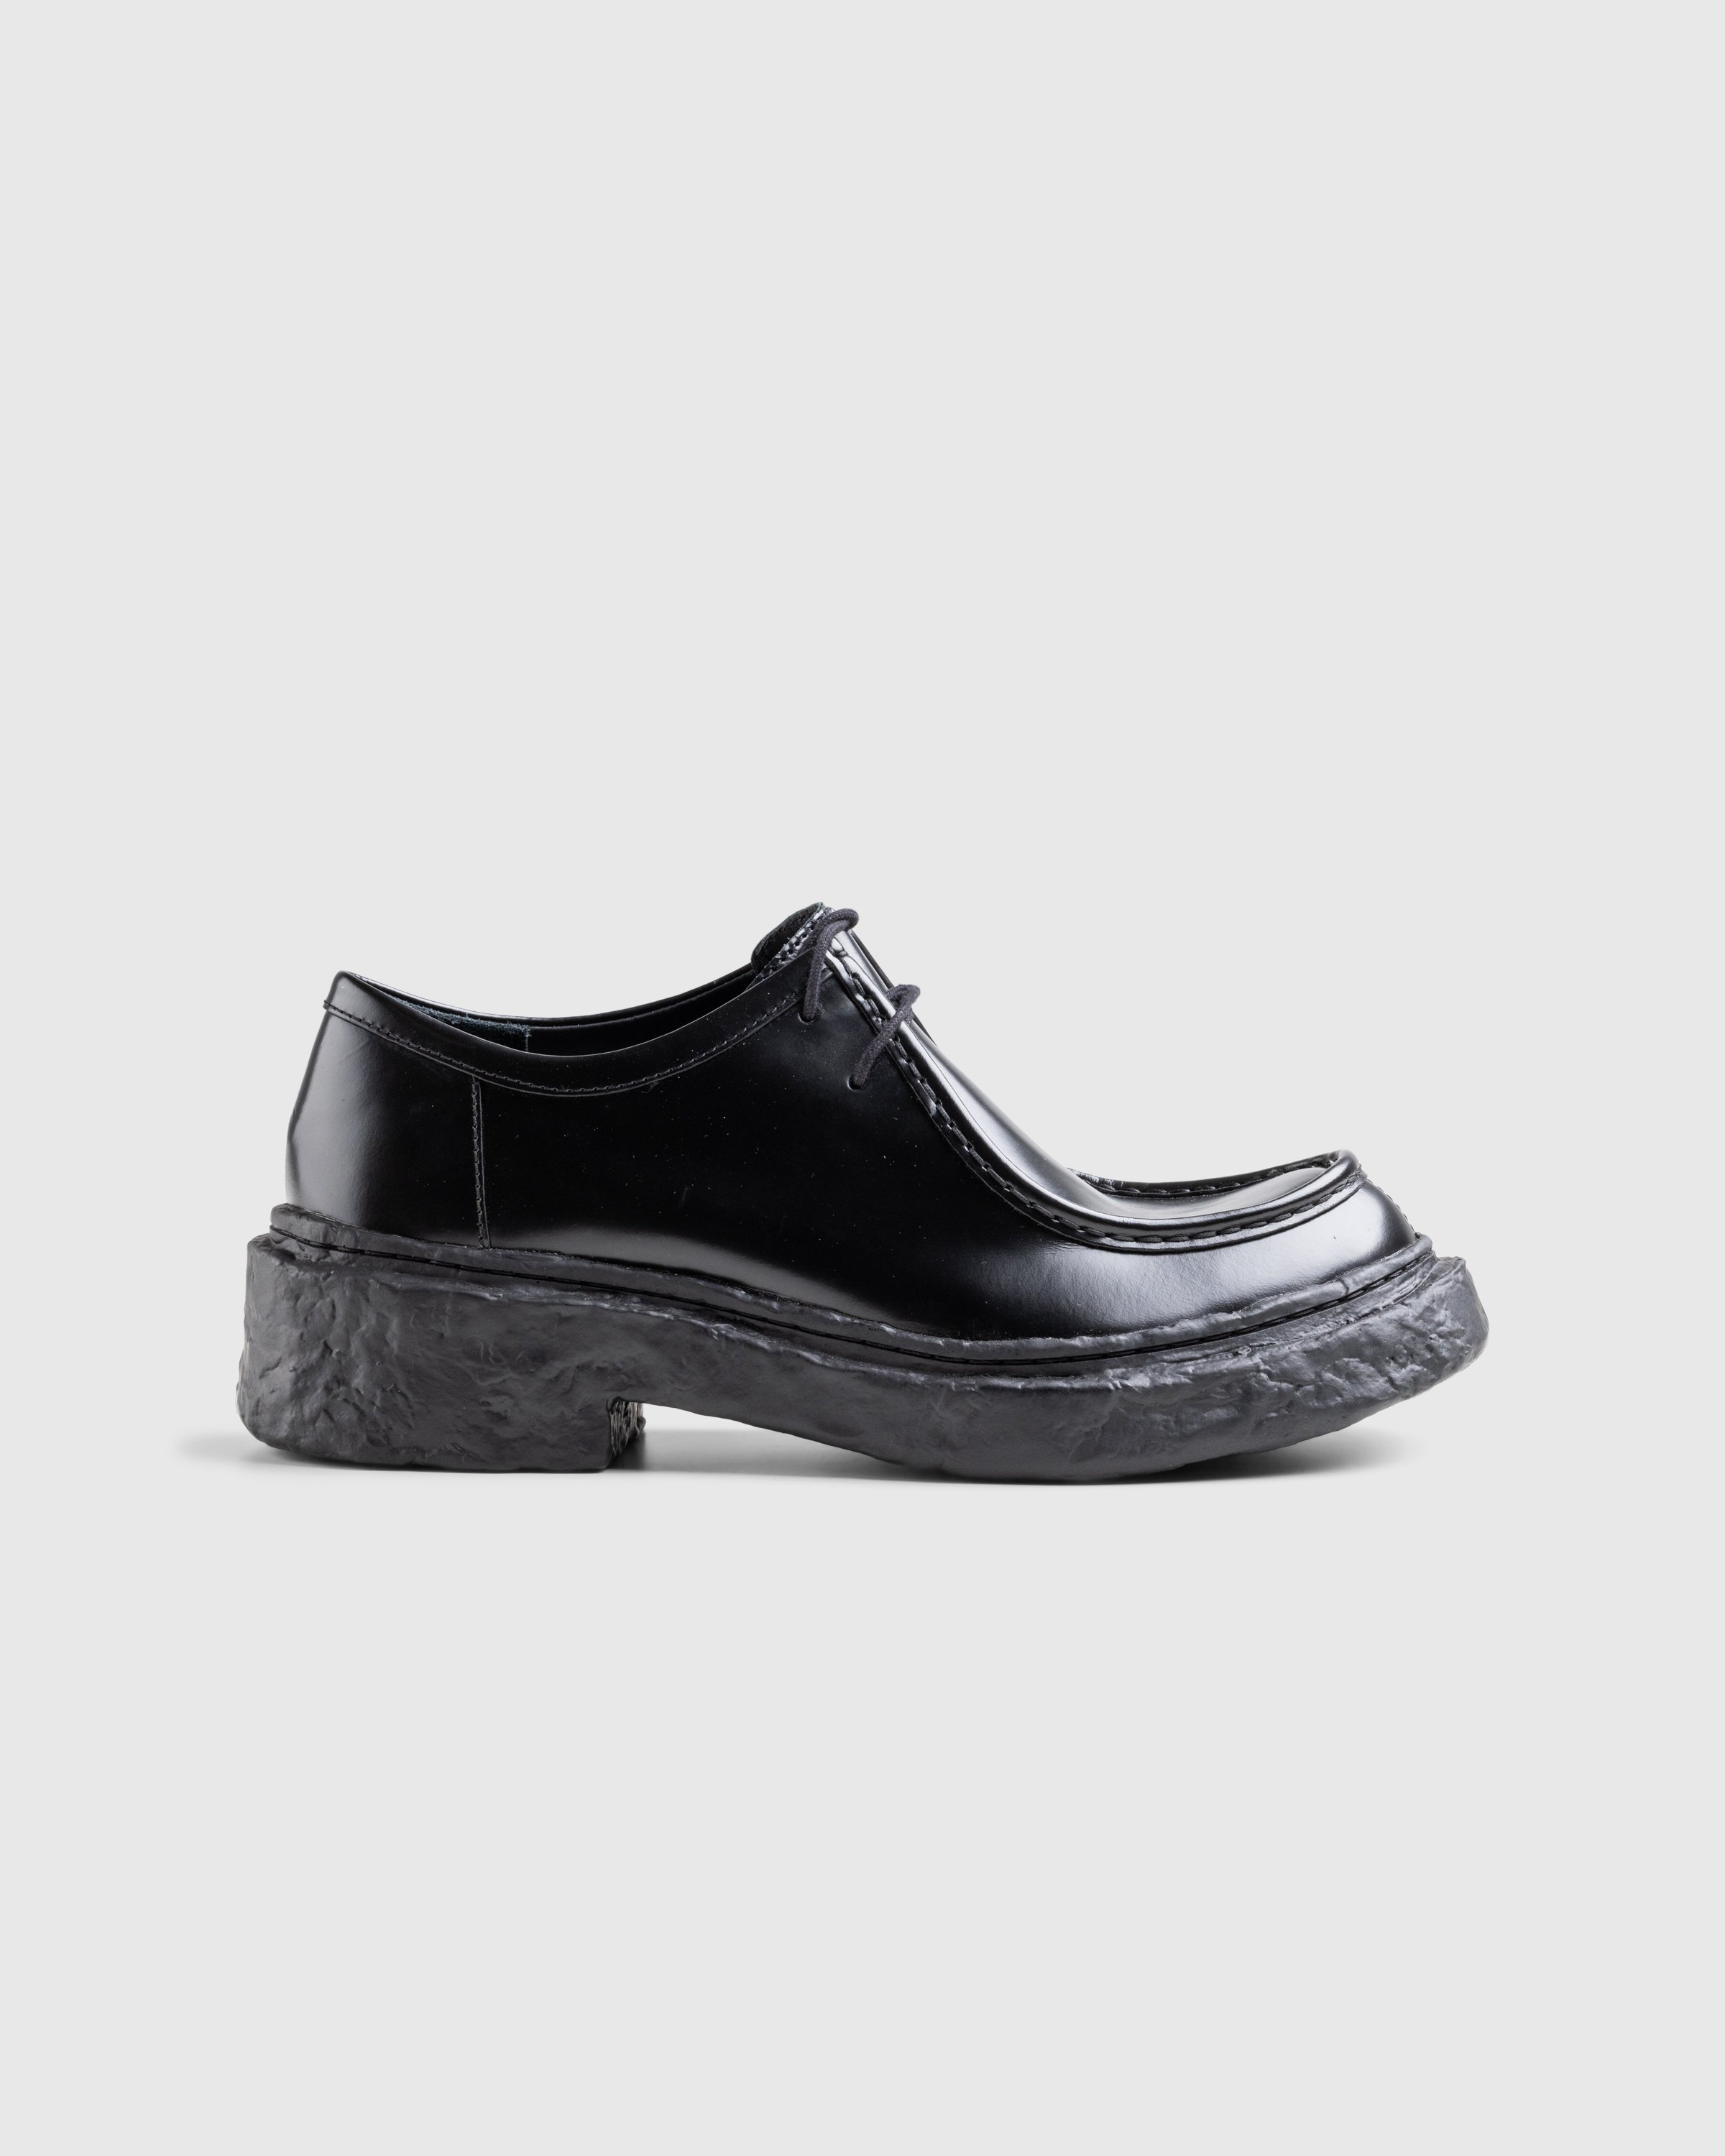 CAMPERLAB - Vamonos - Footwear - Black - Image 1